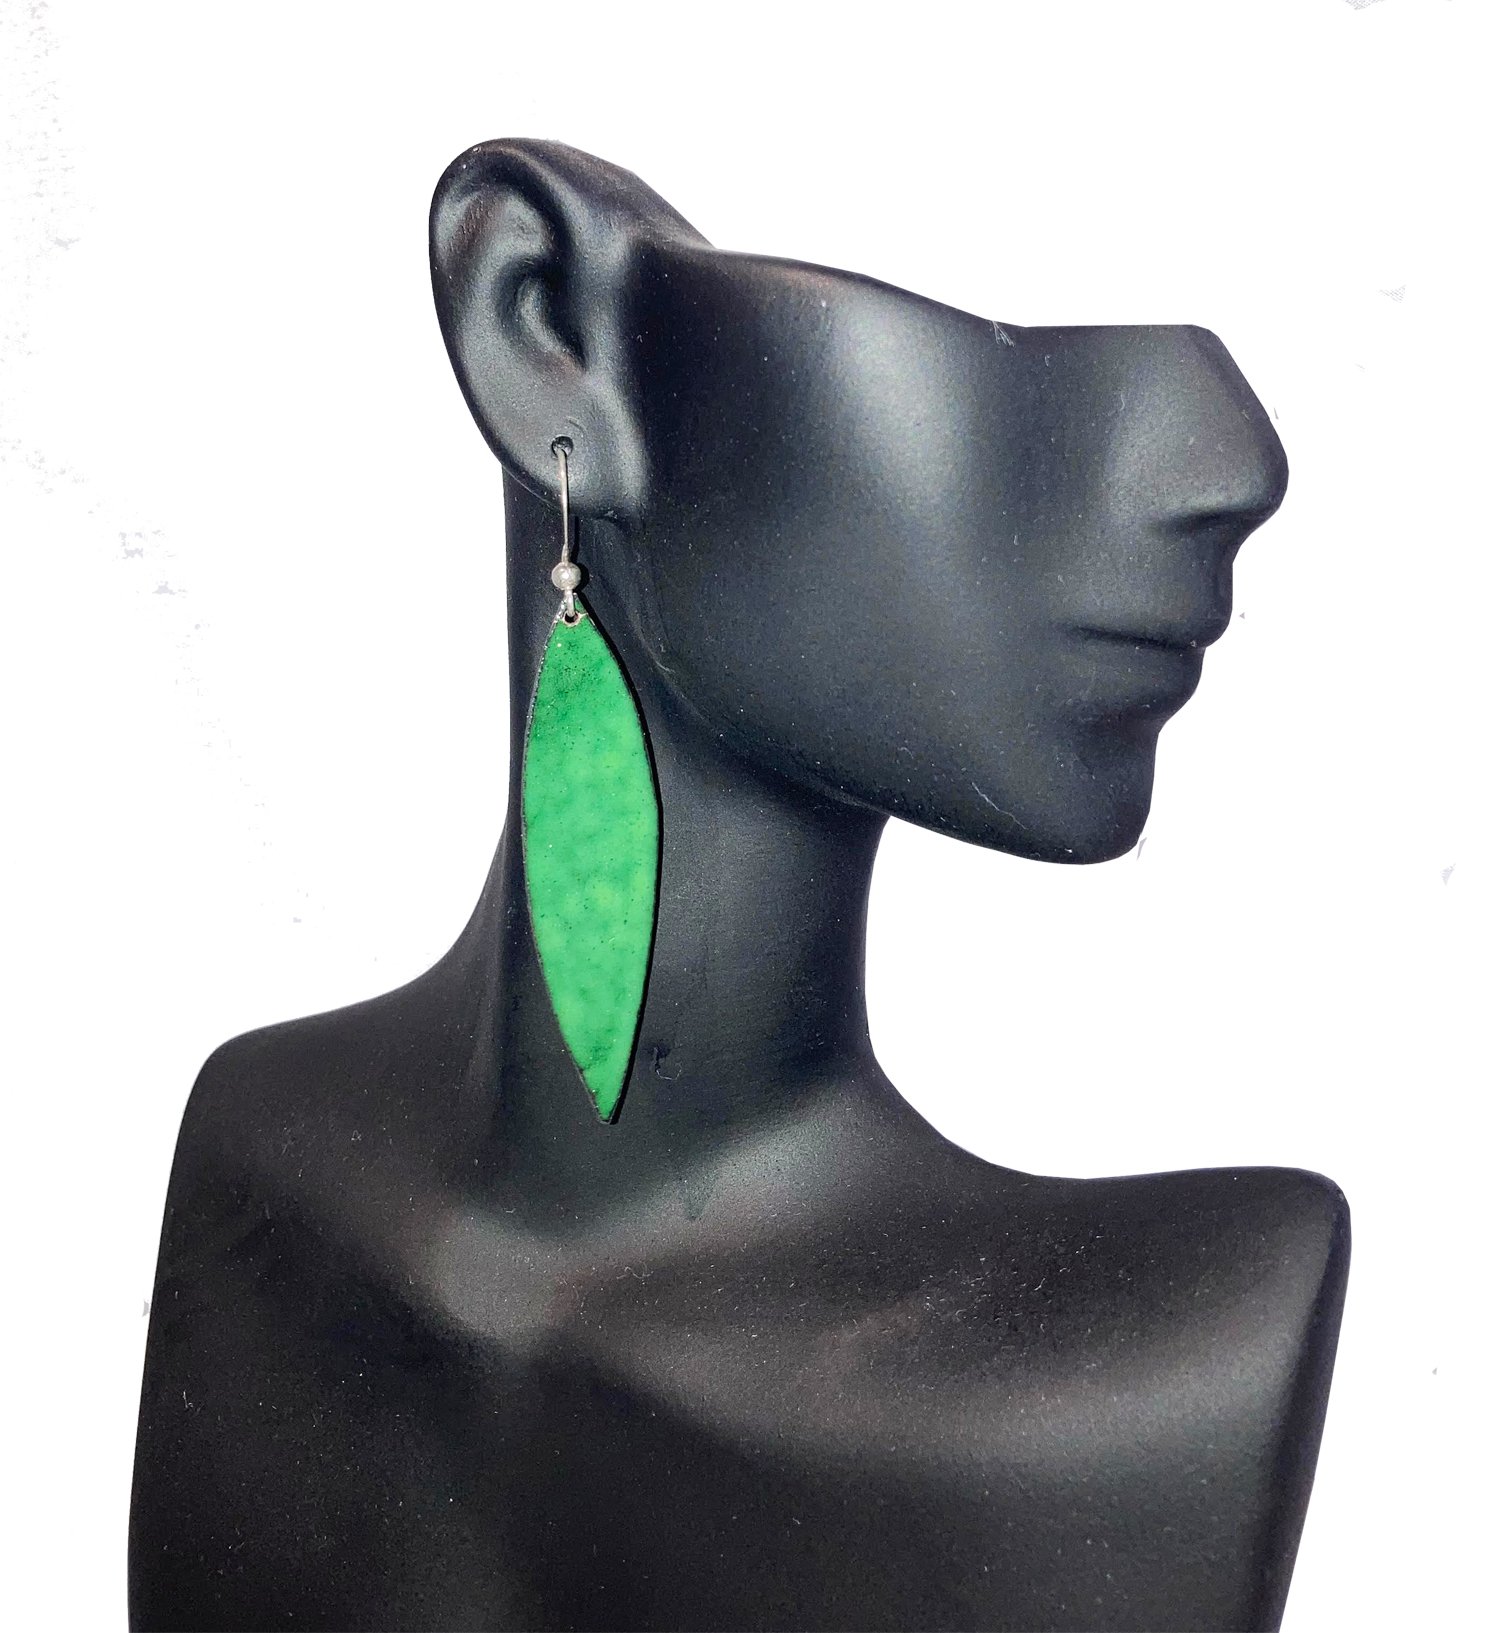 clive shellard made in bradford on avon green earring.jpg